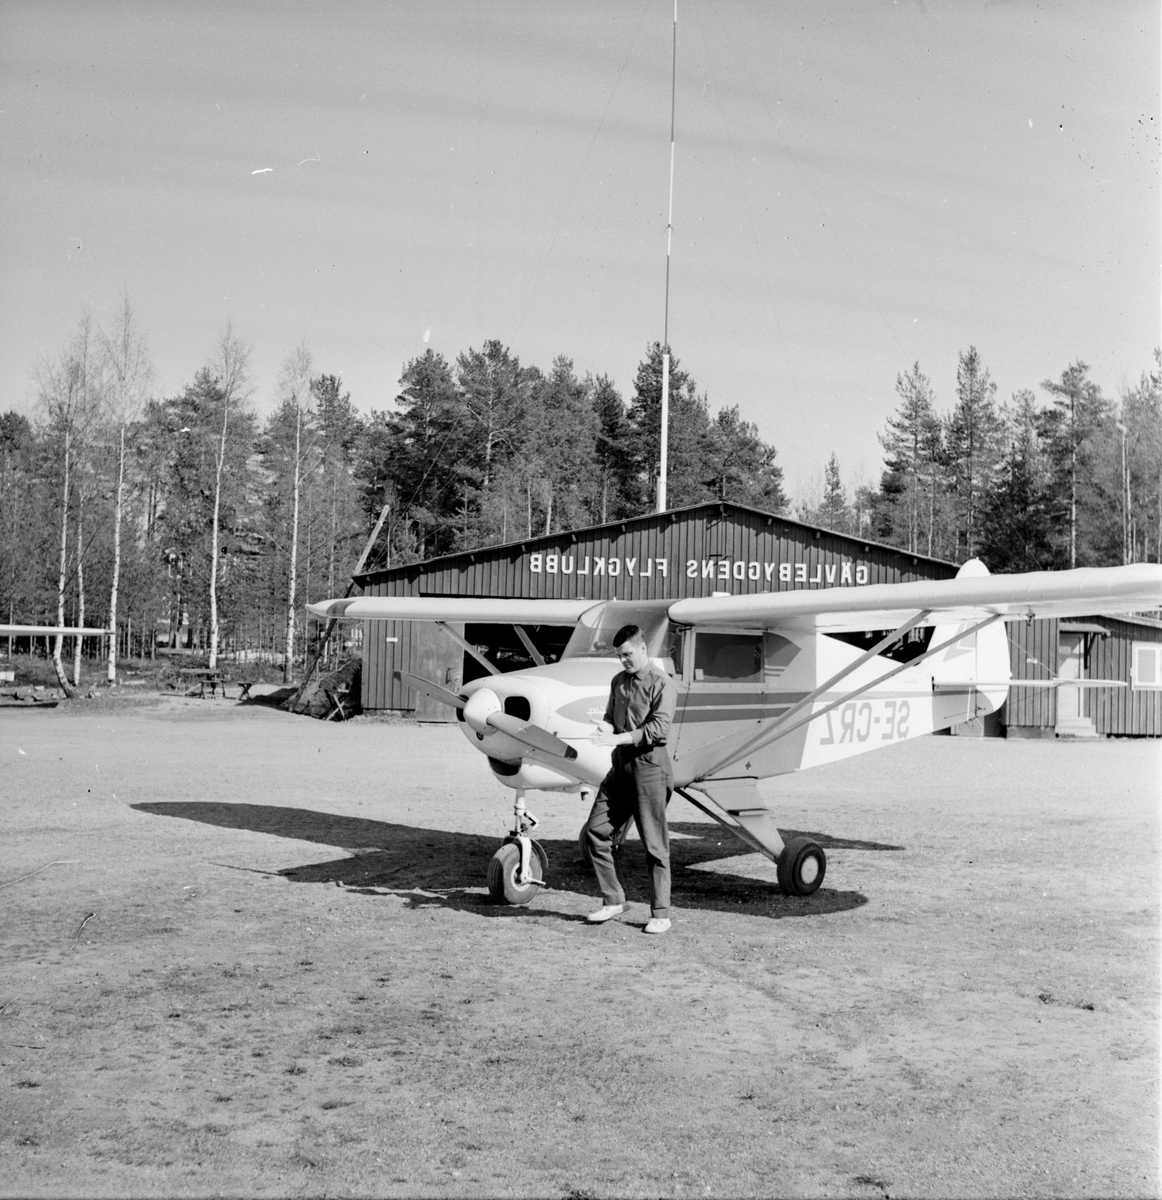 Laurin Roland,
Polis,flygare,
17 Maj 1966
